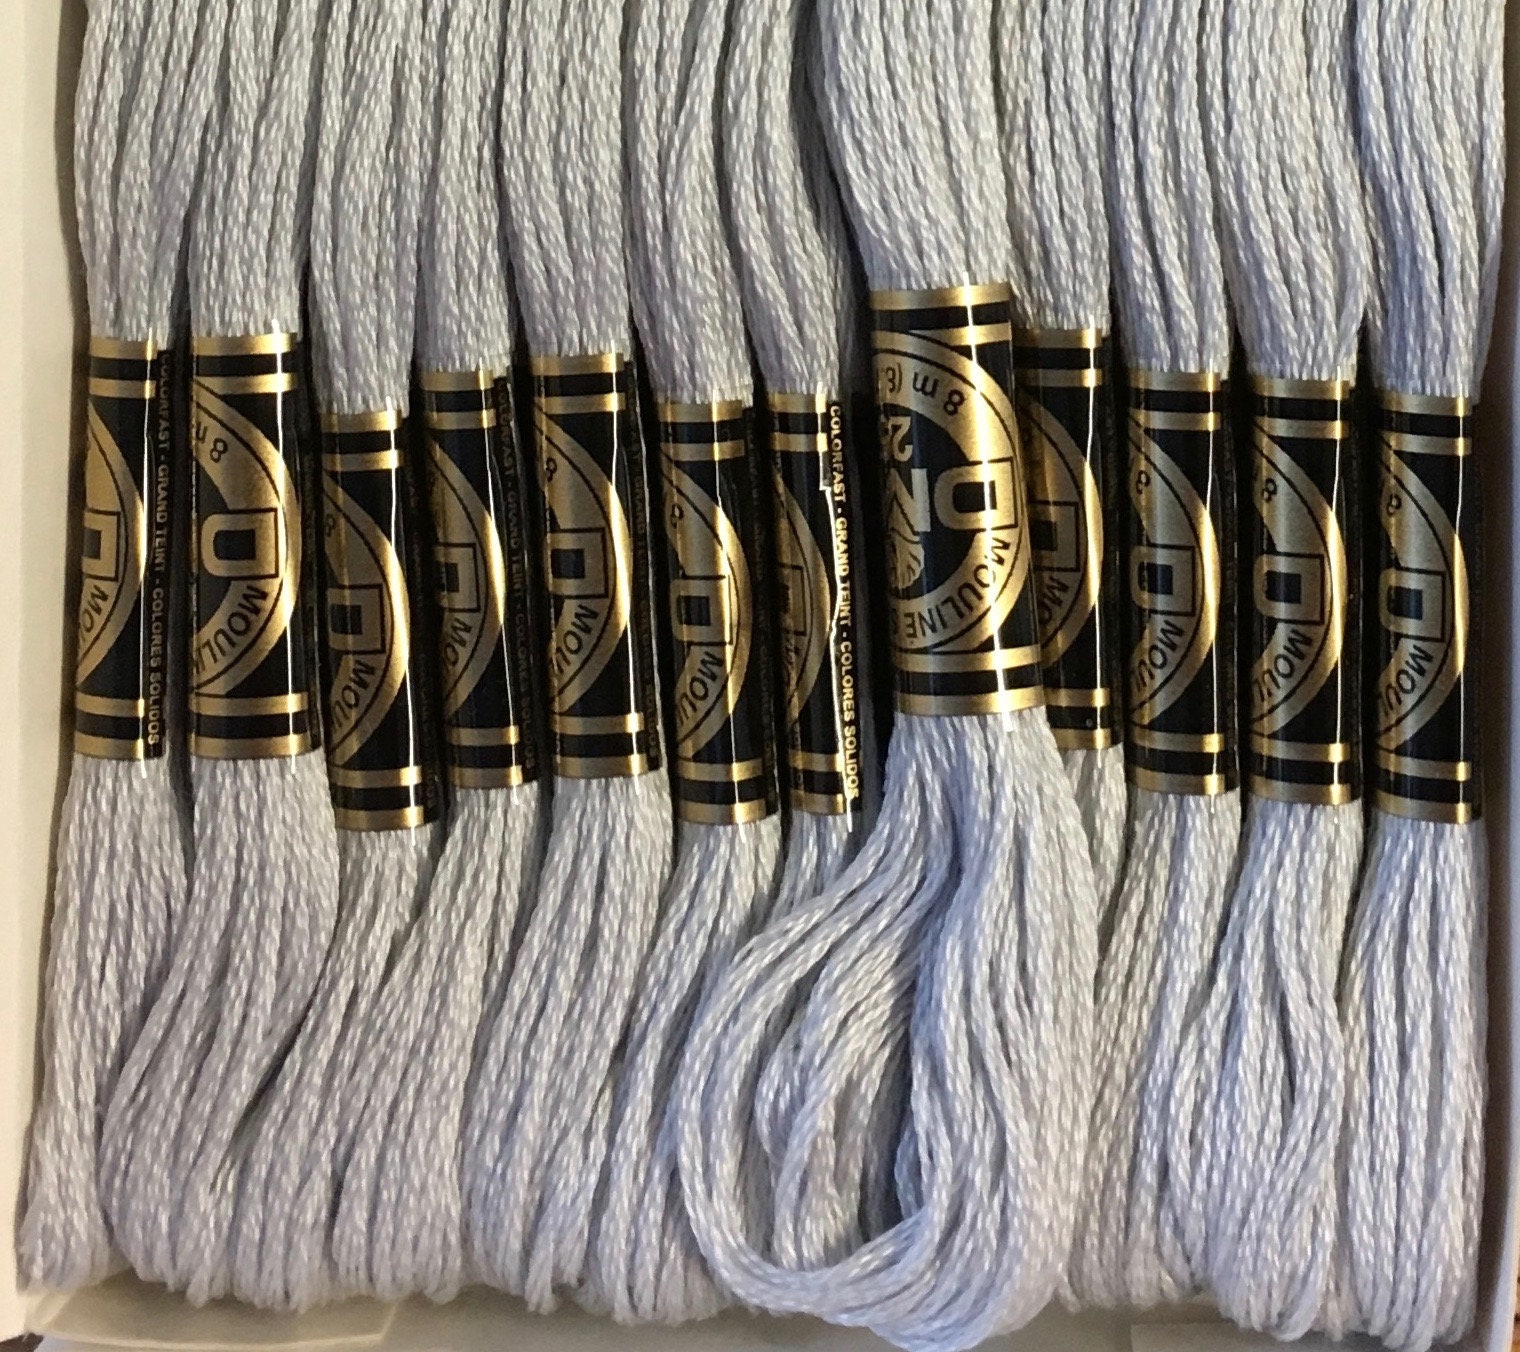  DMC 117-BLANC 6 Strand Embroidery Cotton Floss, White, 8.7-Yard